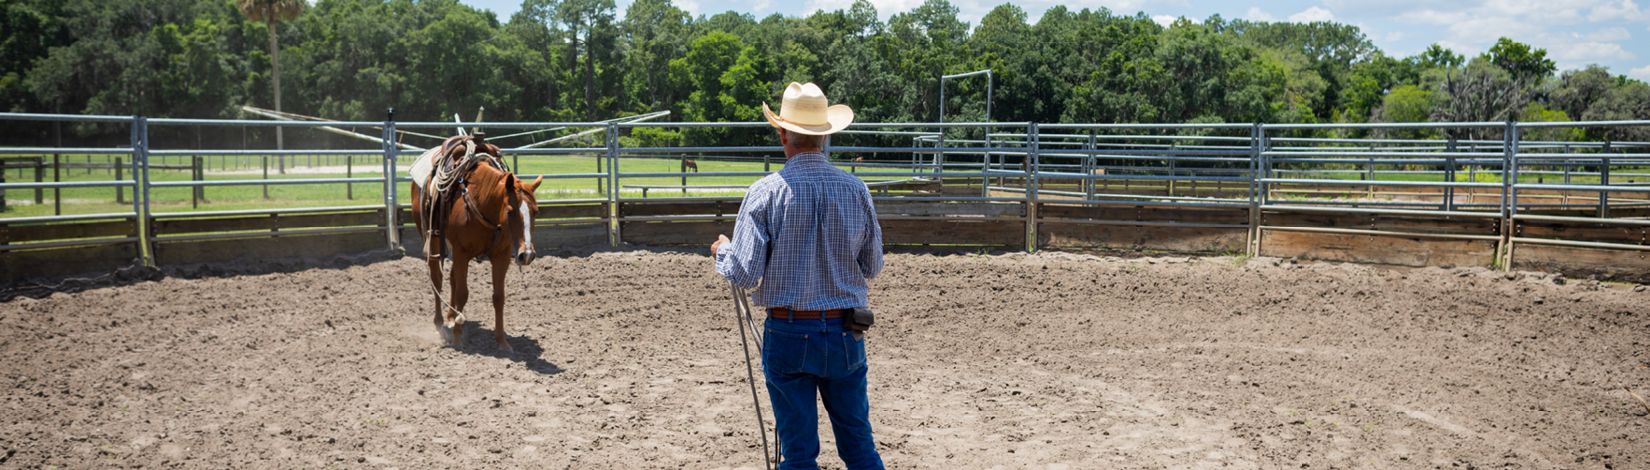 Professor lungeing a horse in an outdoor round pen